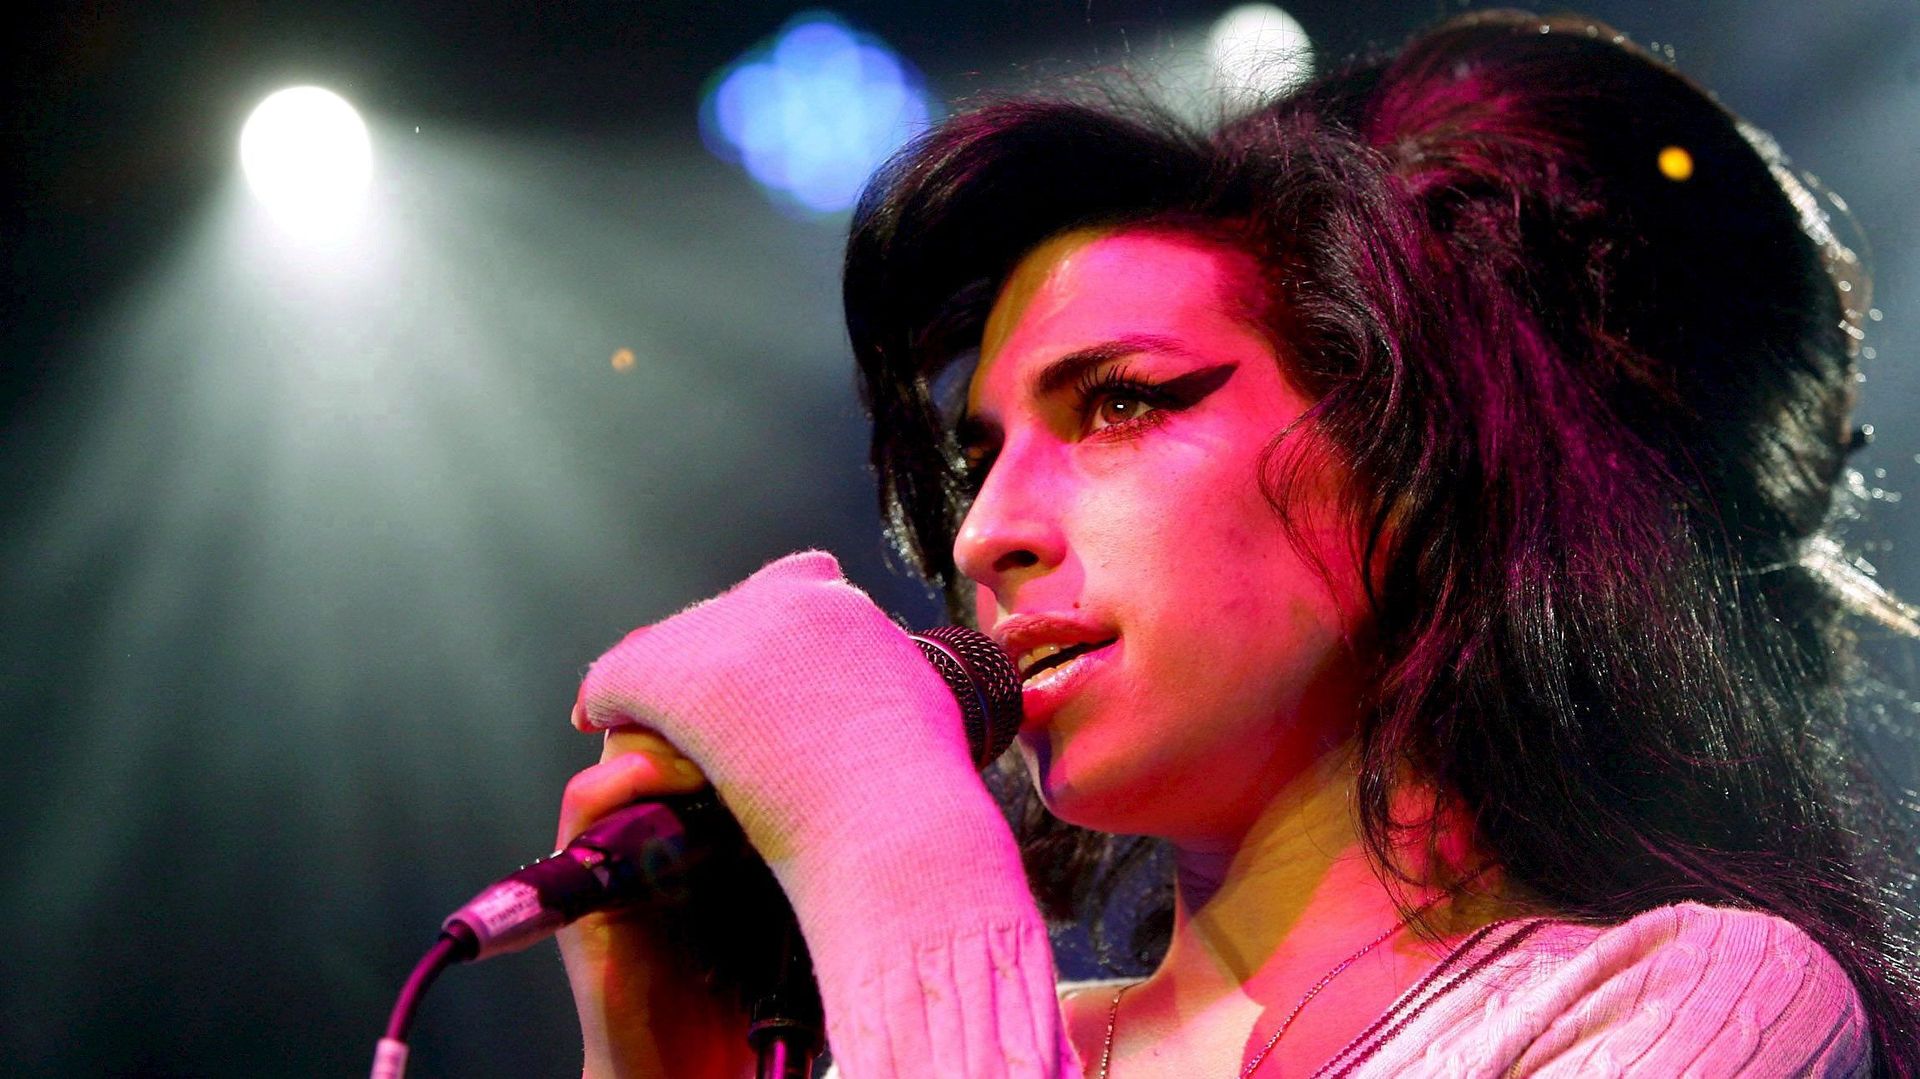 British singer Amy Winehouse was arrested on suspicion